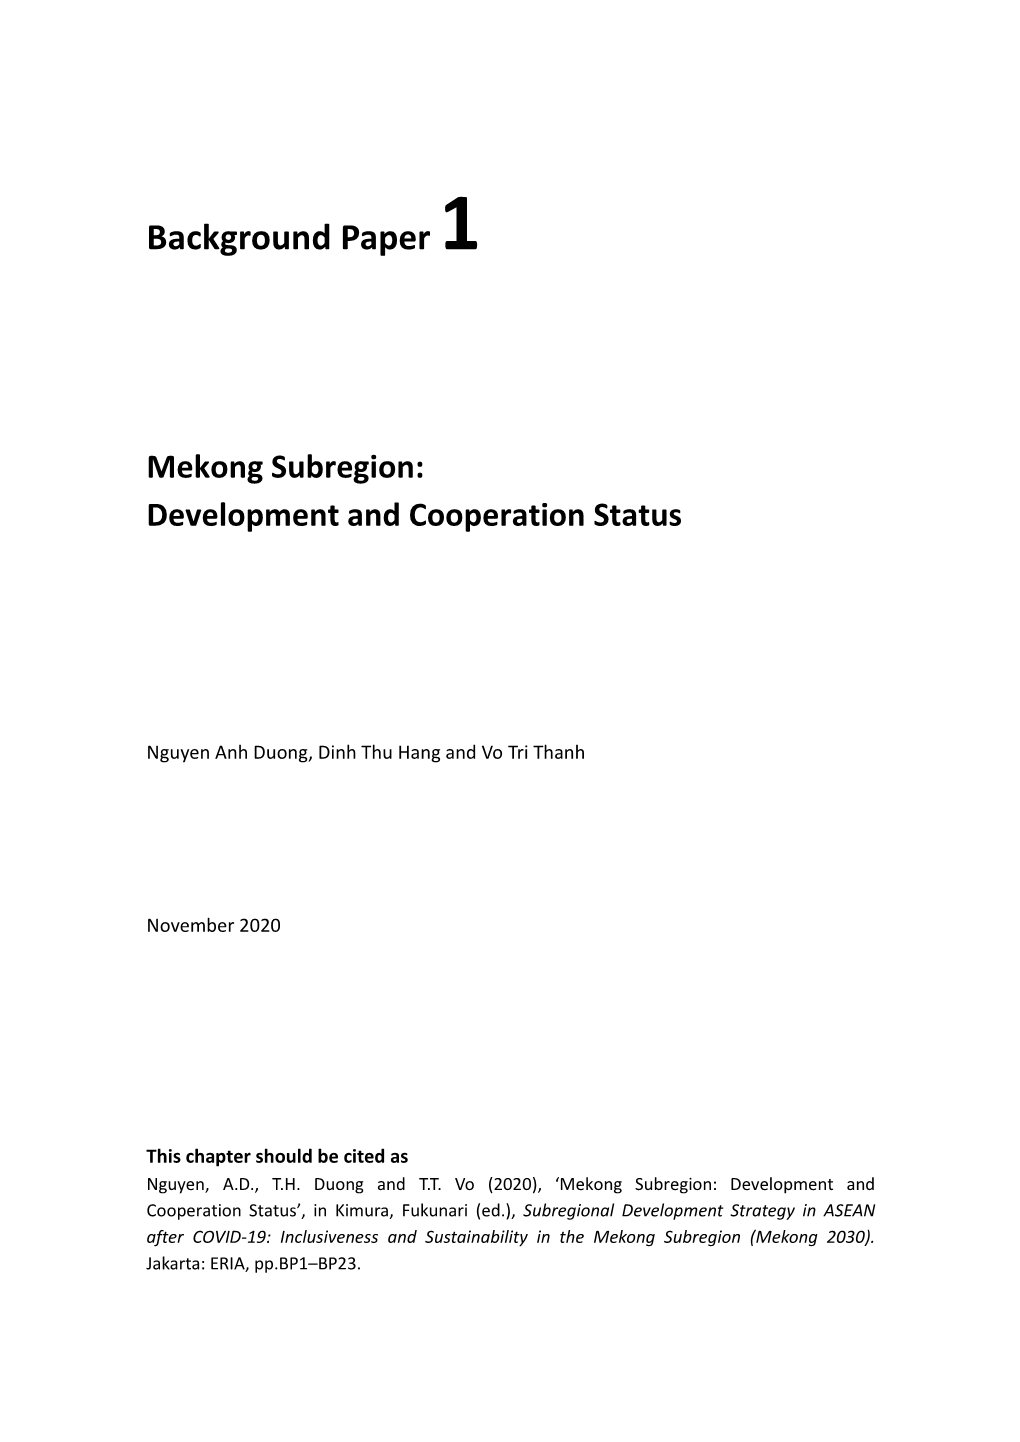 Mekong Subregion: Development and Cooperation Status